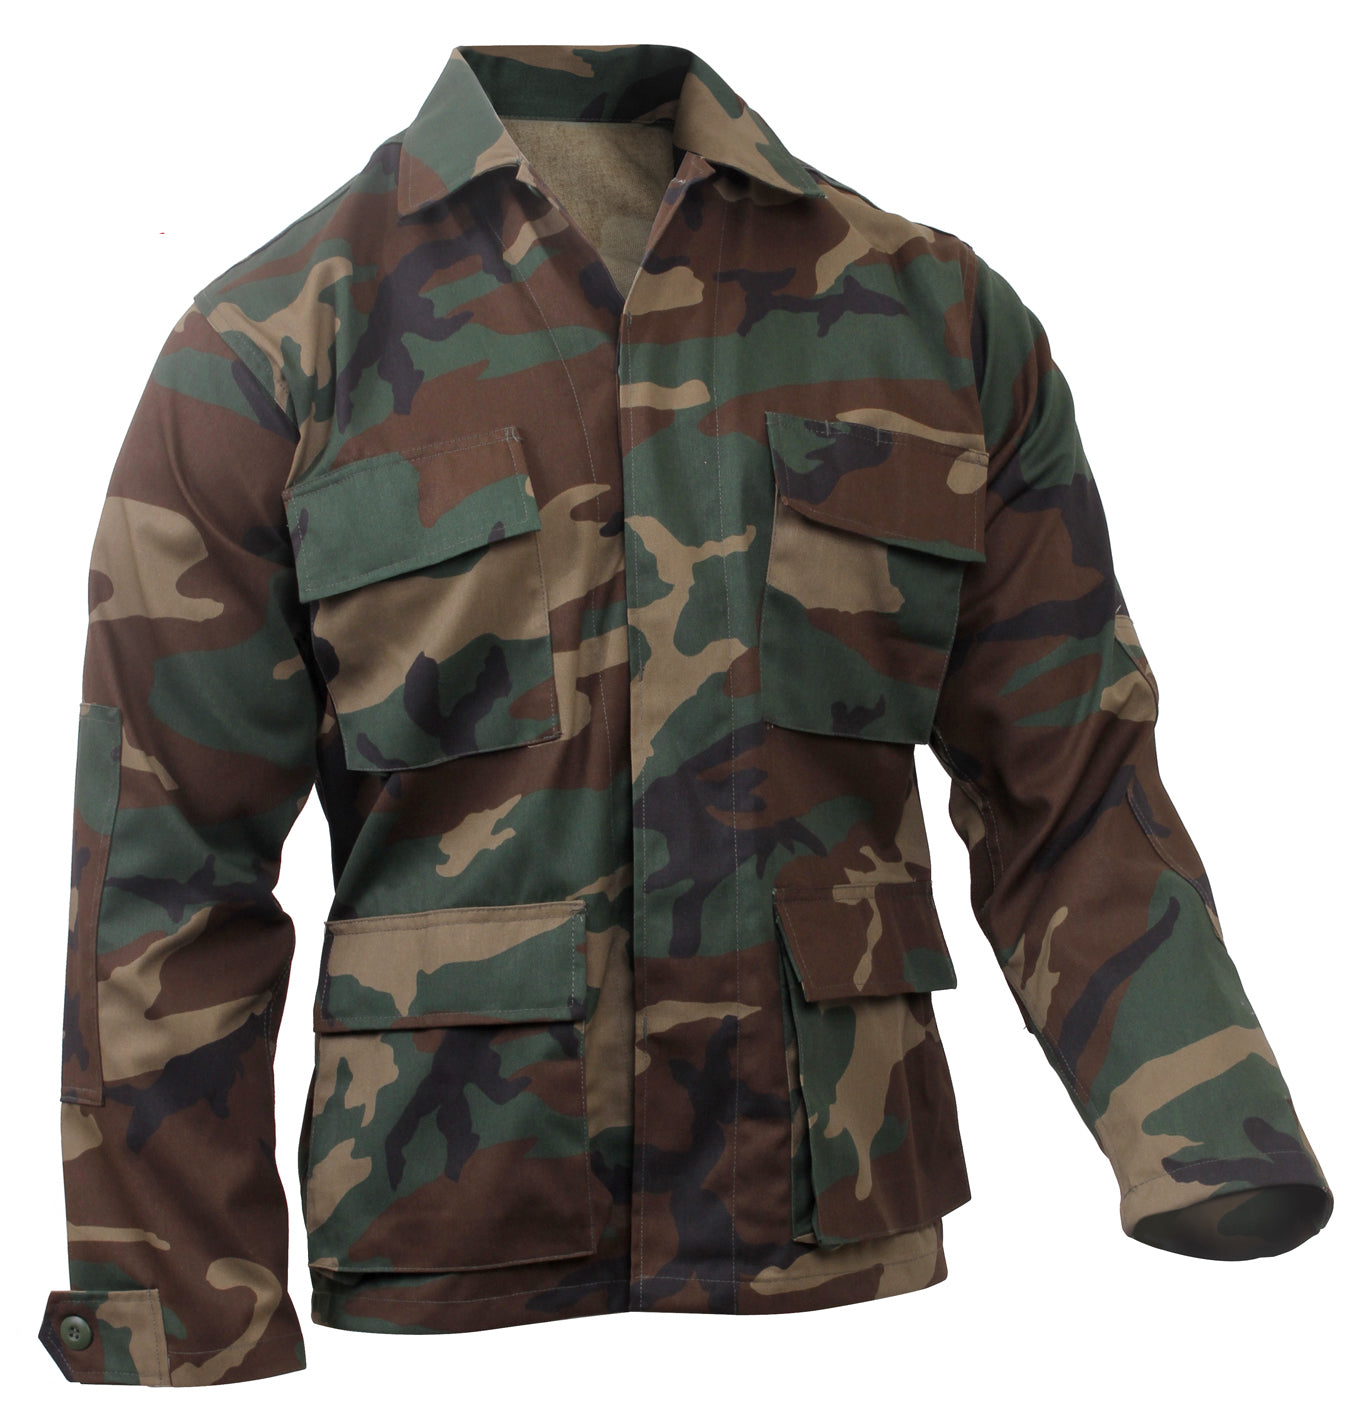 Milspec Camo BDU Shirt Big & Tall Shirts MilTac Tactical Military Outdoor Gear Australia